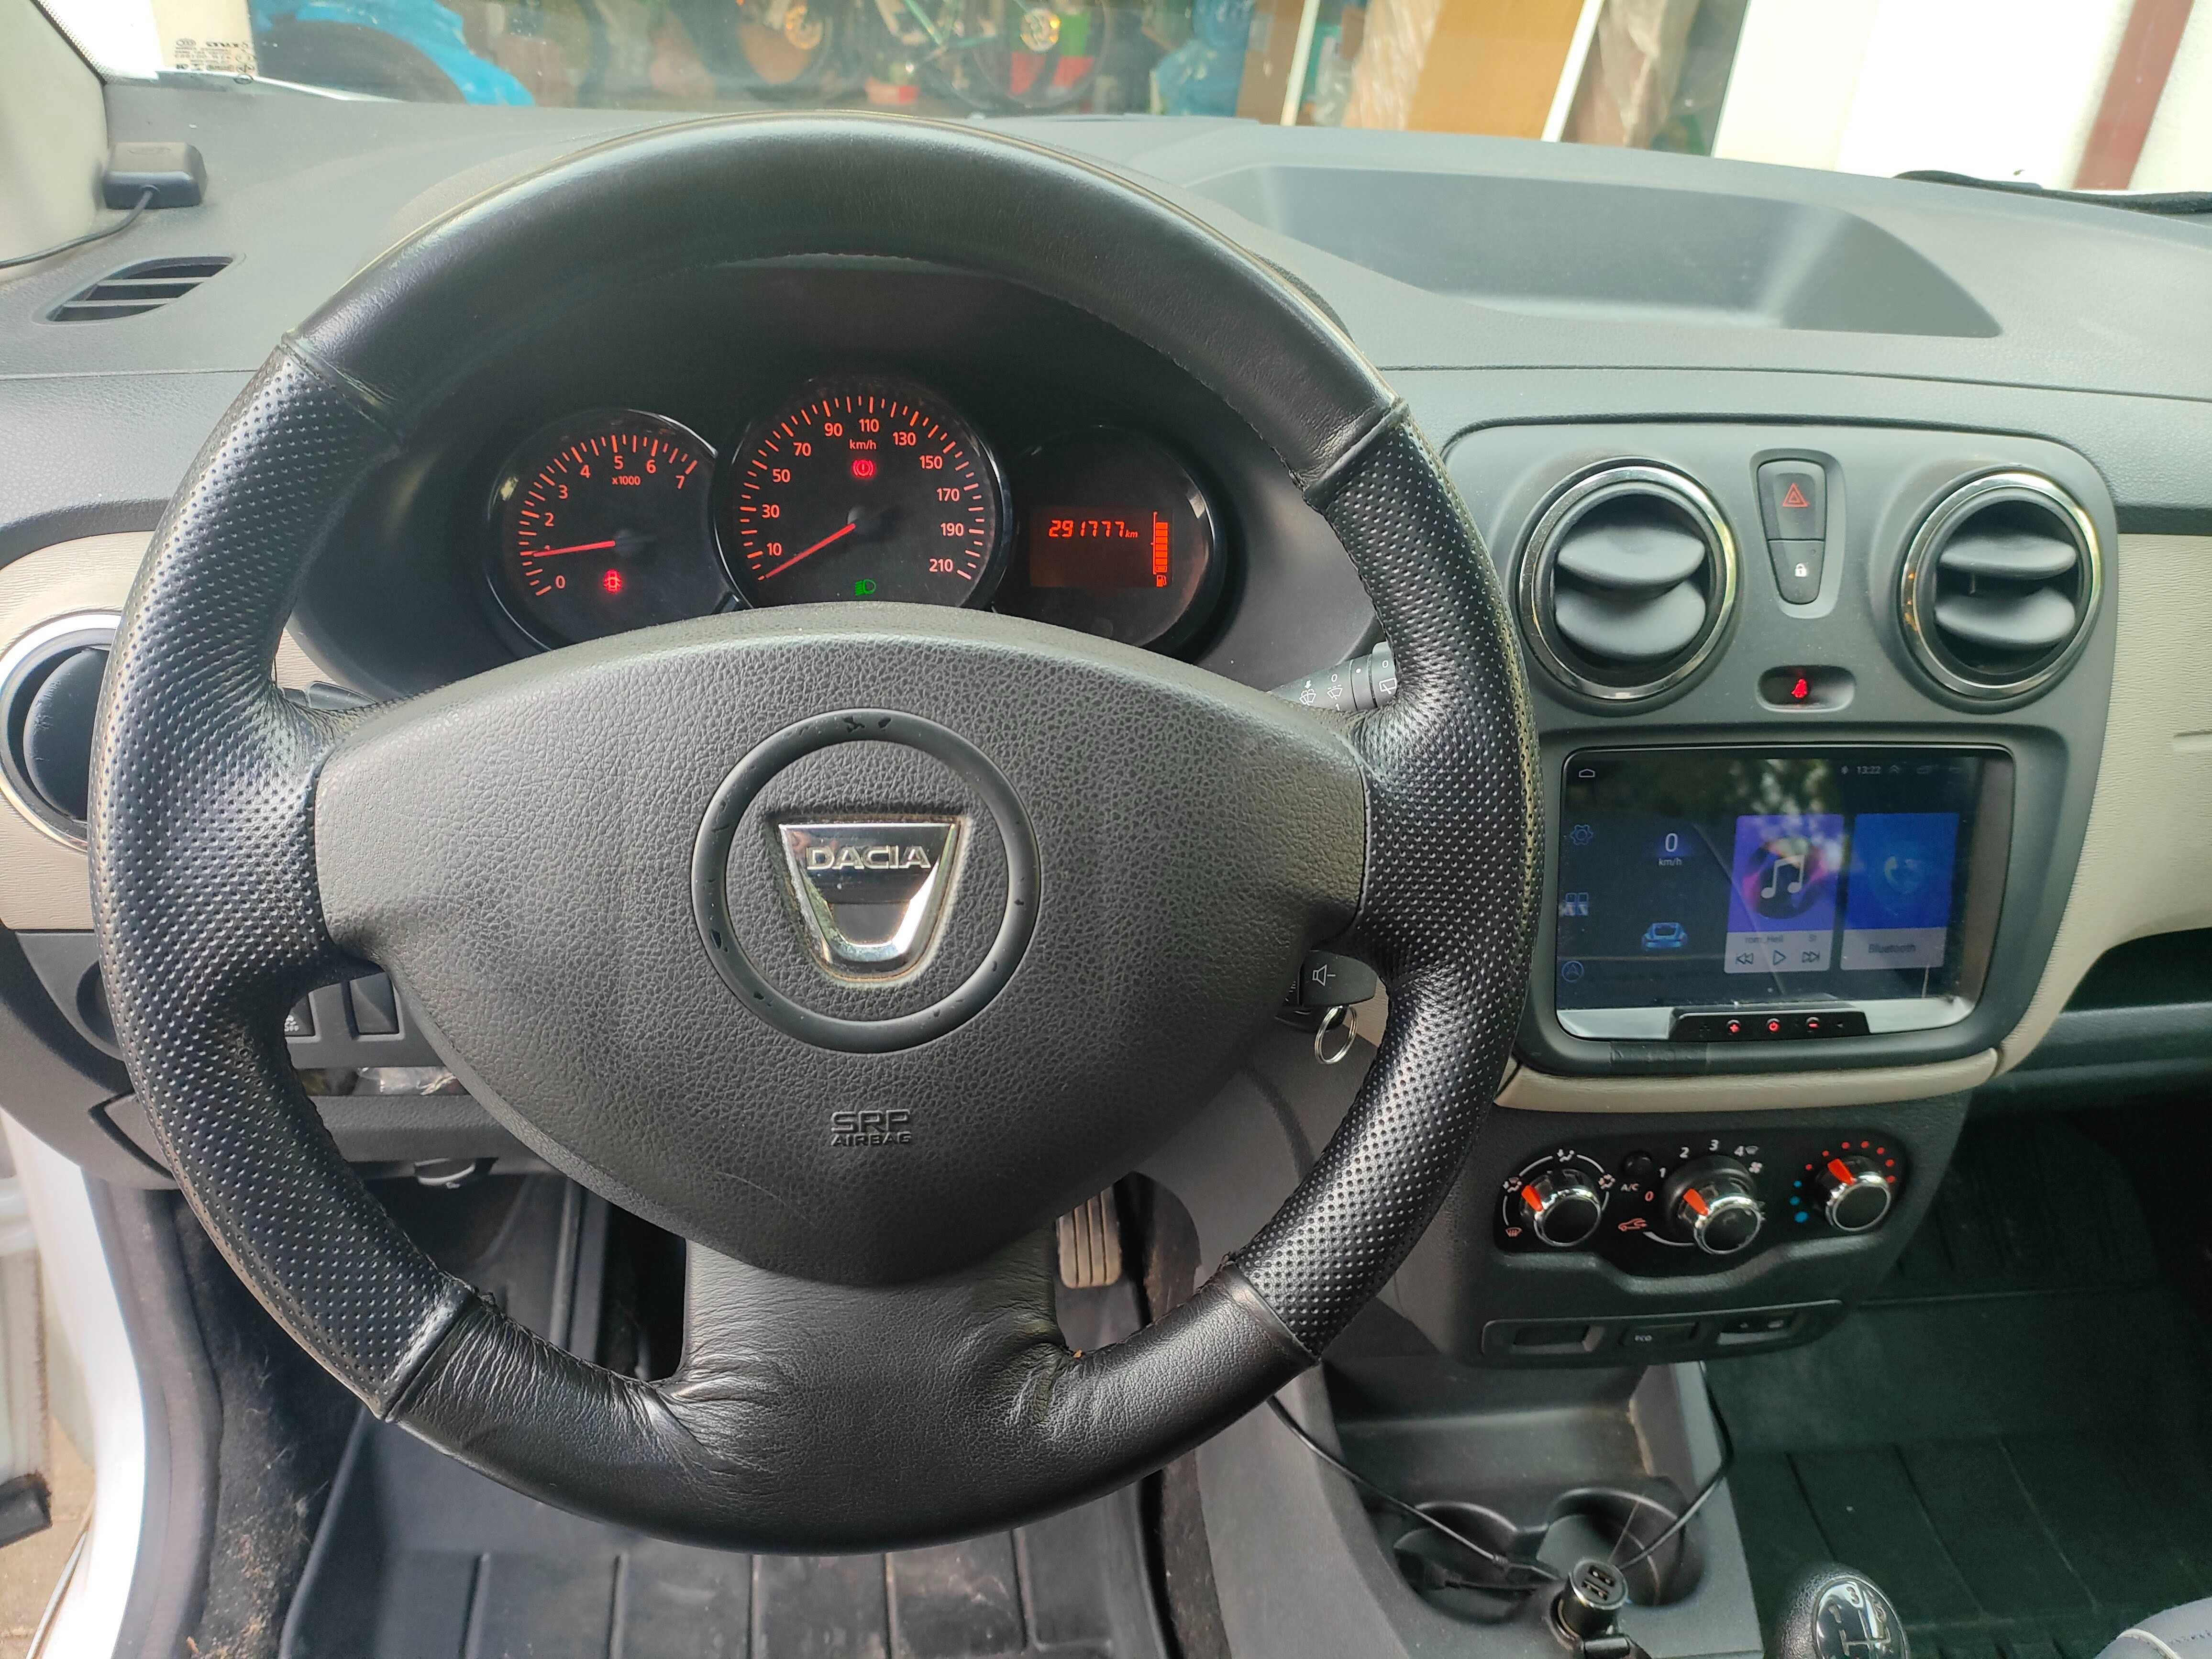 Dacia Lodgy 1.6 SCe Ambiance S&S salon Polska 2016, hak, gaz